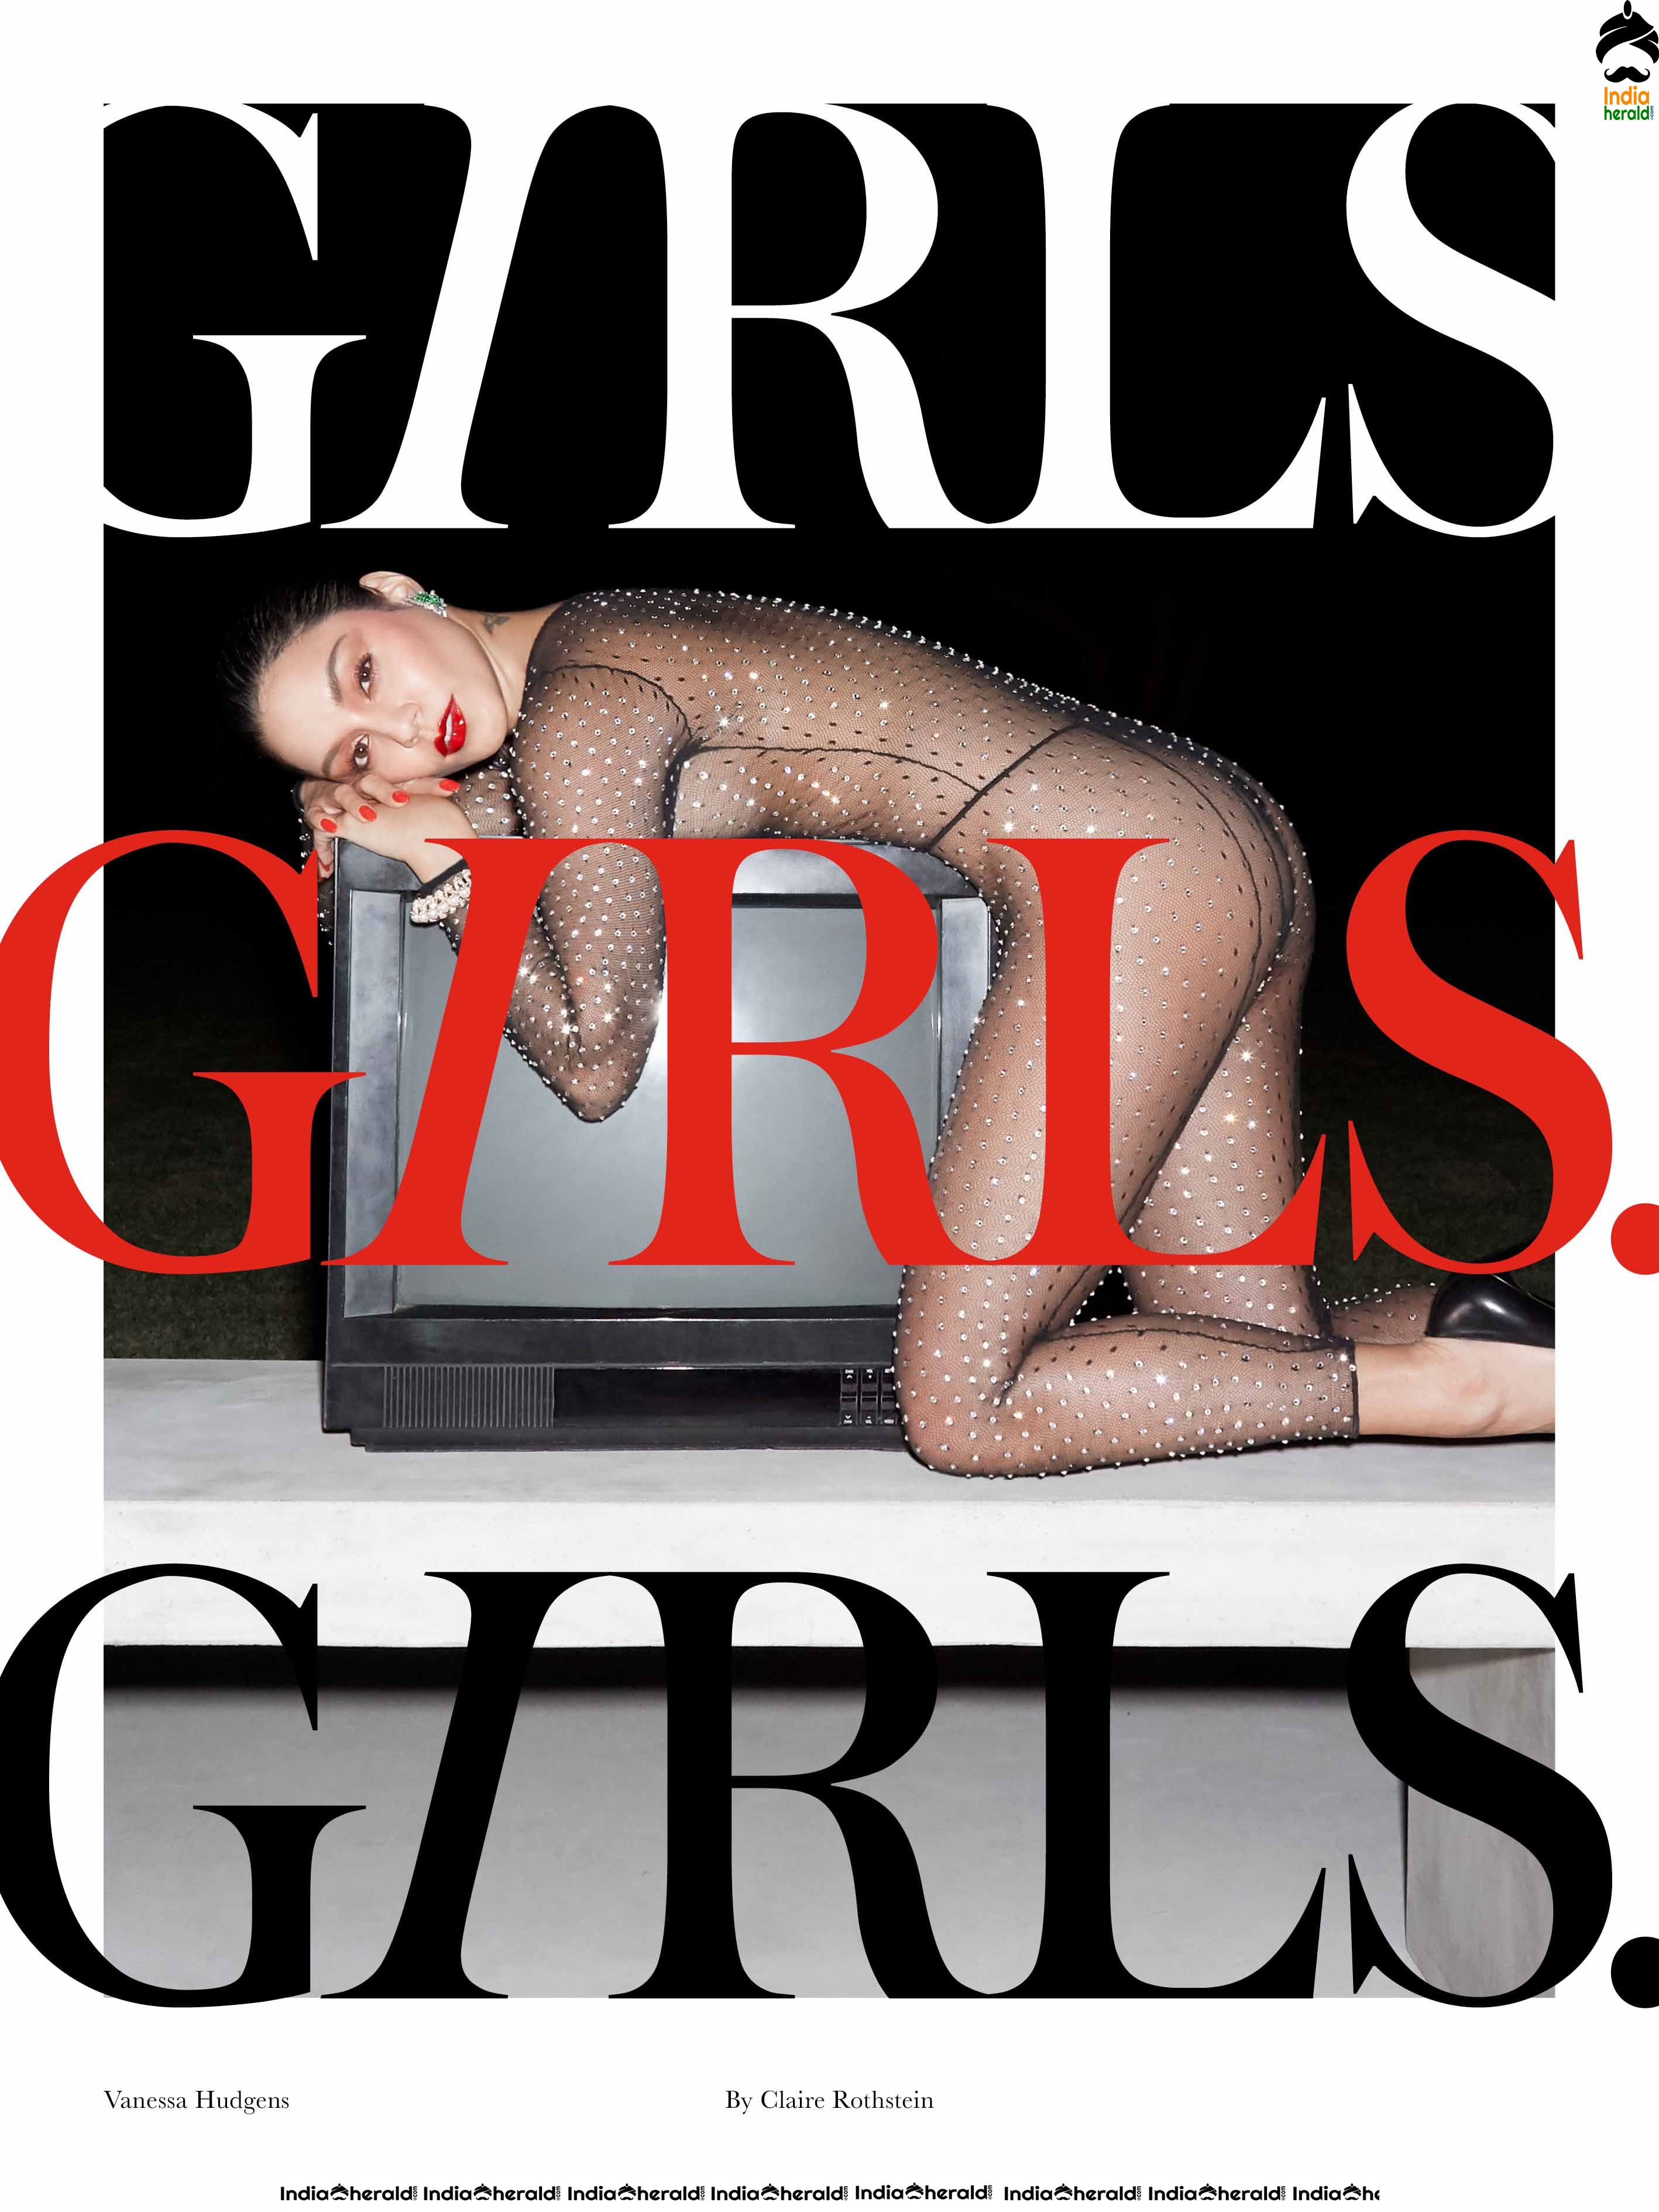 Vanessa Hudgens Hottest Exposing Photoshoot for Girls Girls Girls Magazine